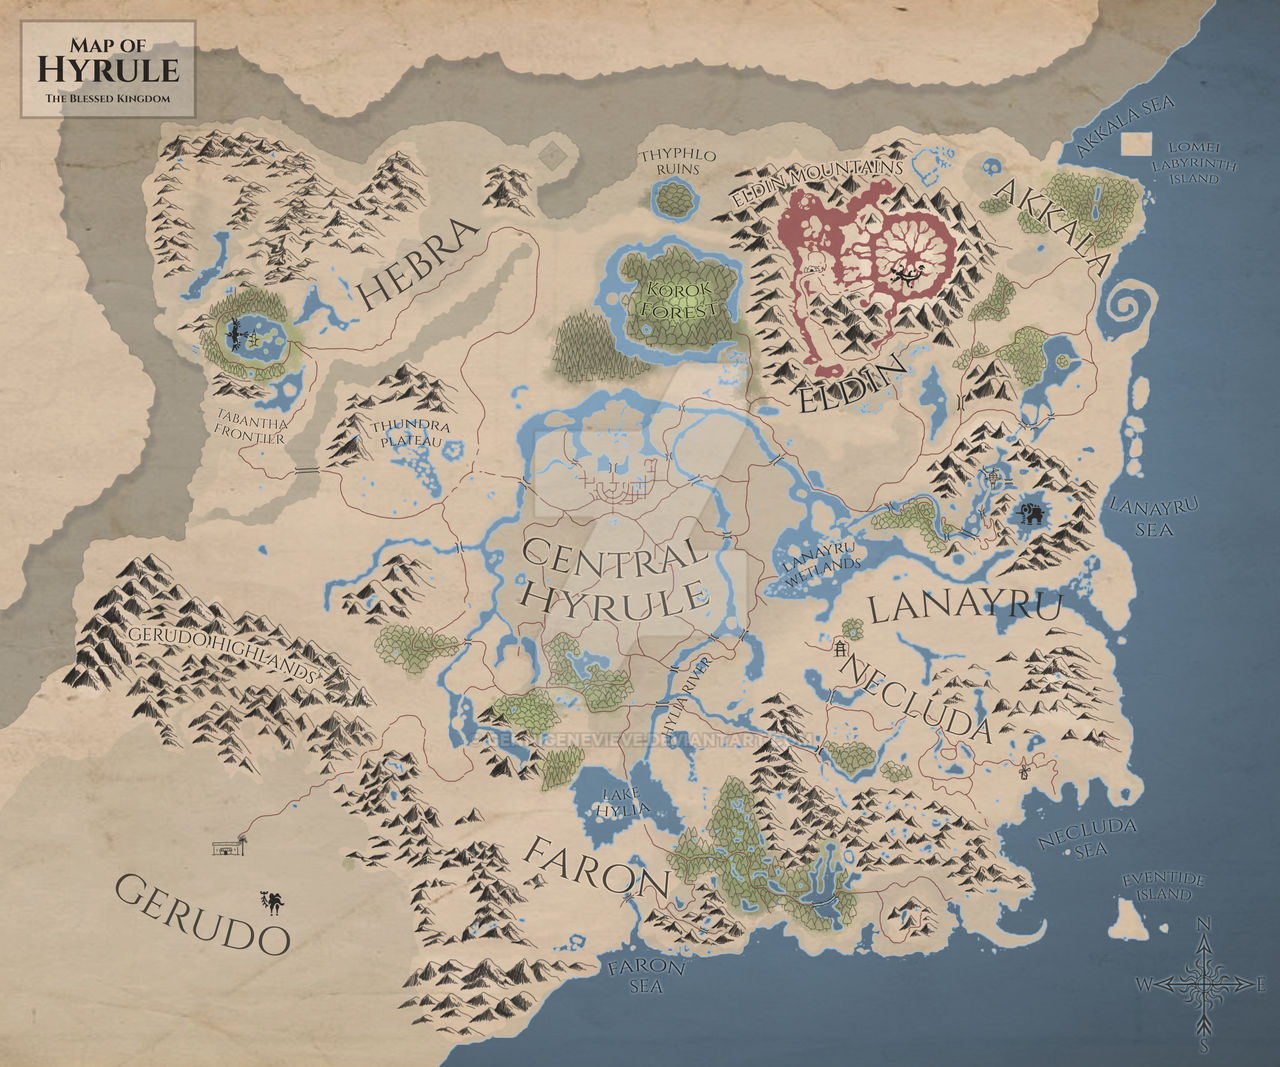 The Legend of Zelda: Breath of the Wild Full Map